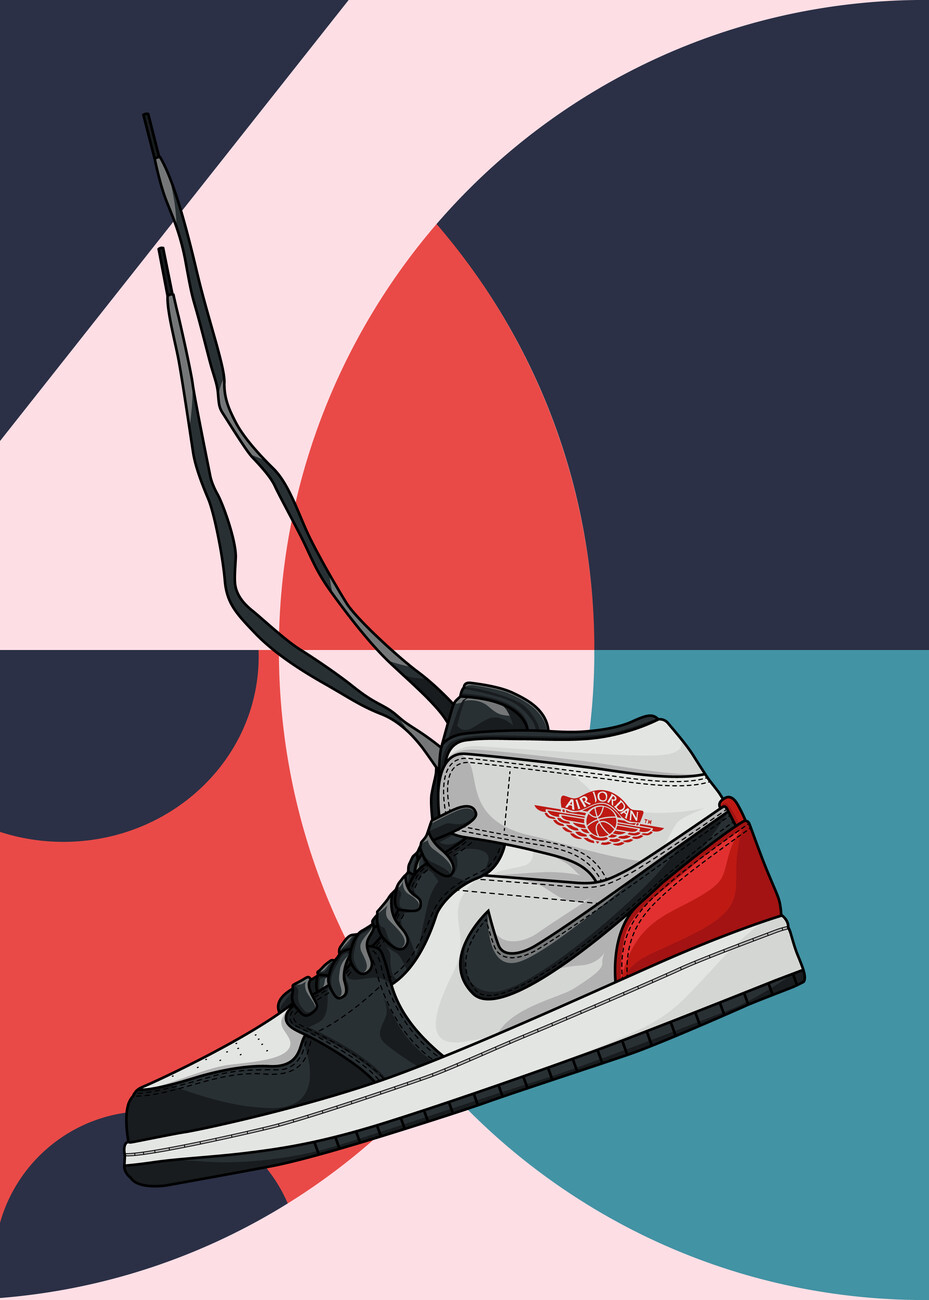 Affiche et Tableau Pop Art de Sneaker Nike Air Jordan - AFFICHE